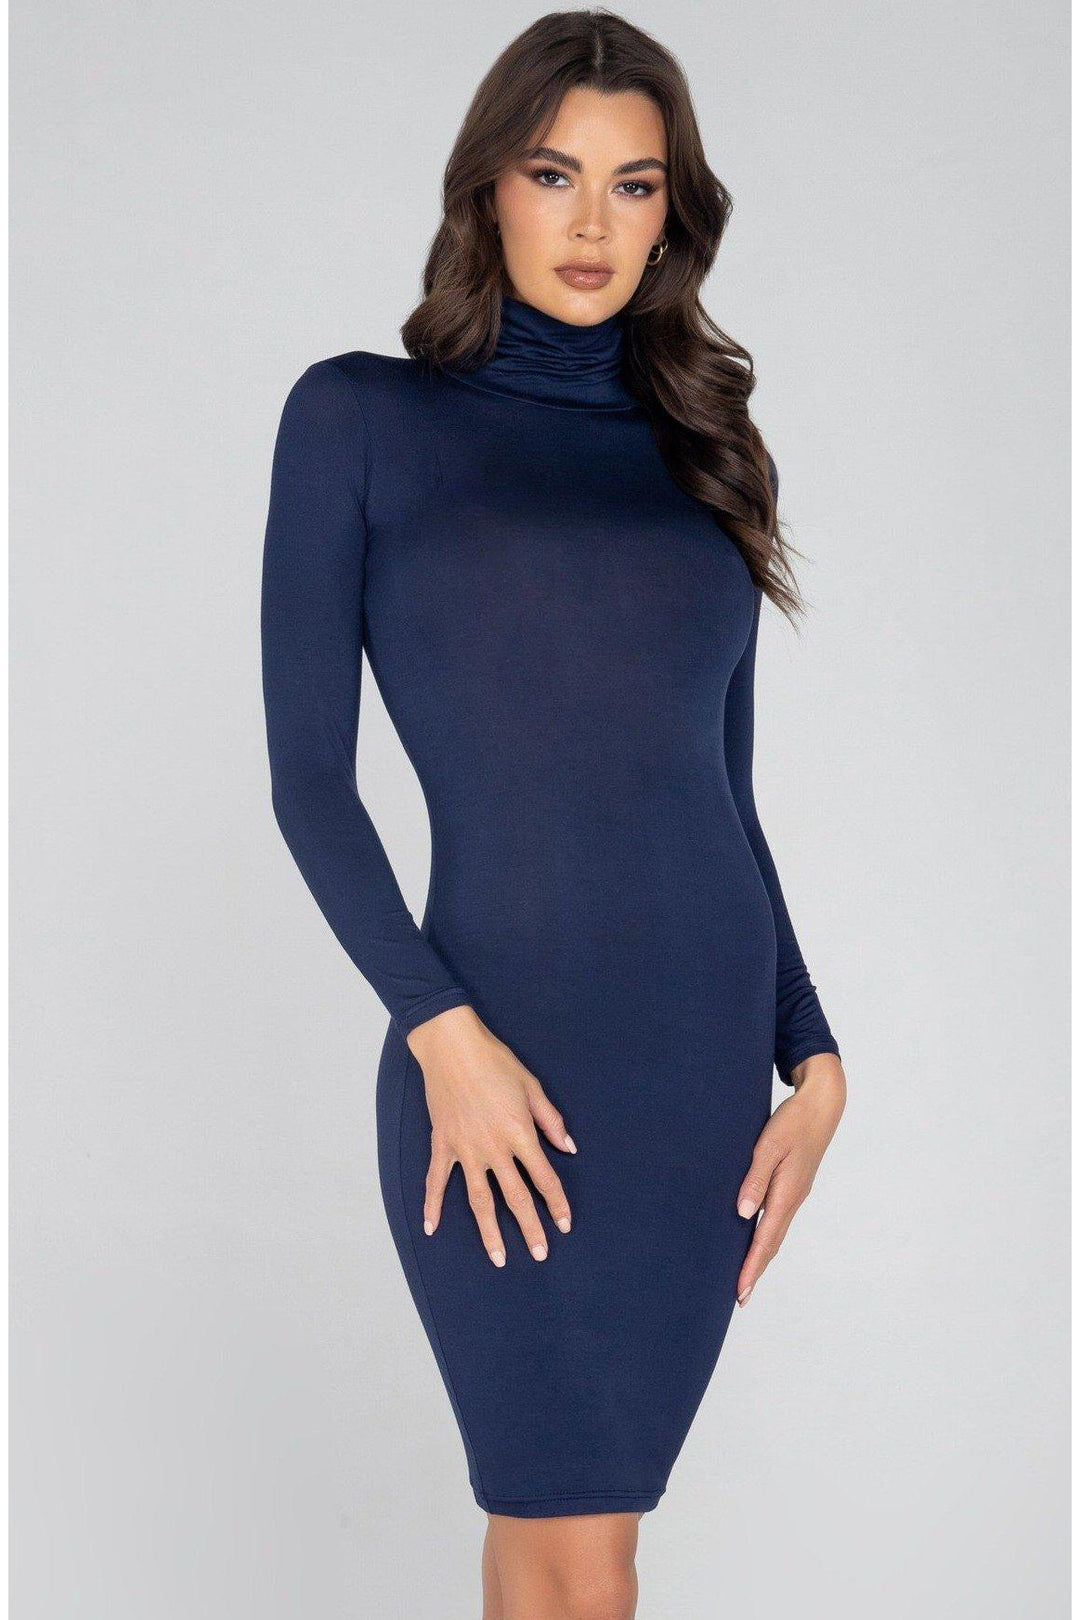 SS-Classic Turtle Neck Midi Dress-Clothing-Roma Brand-Blue-S-SEXYSHOES.COM